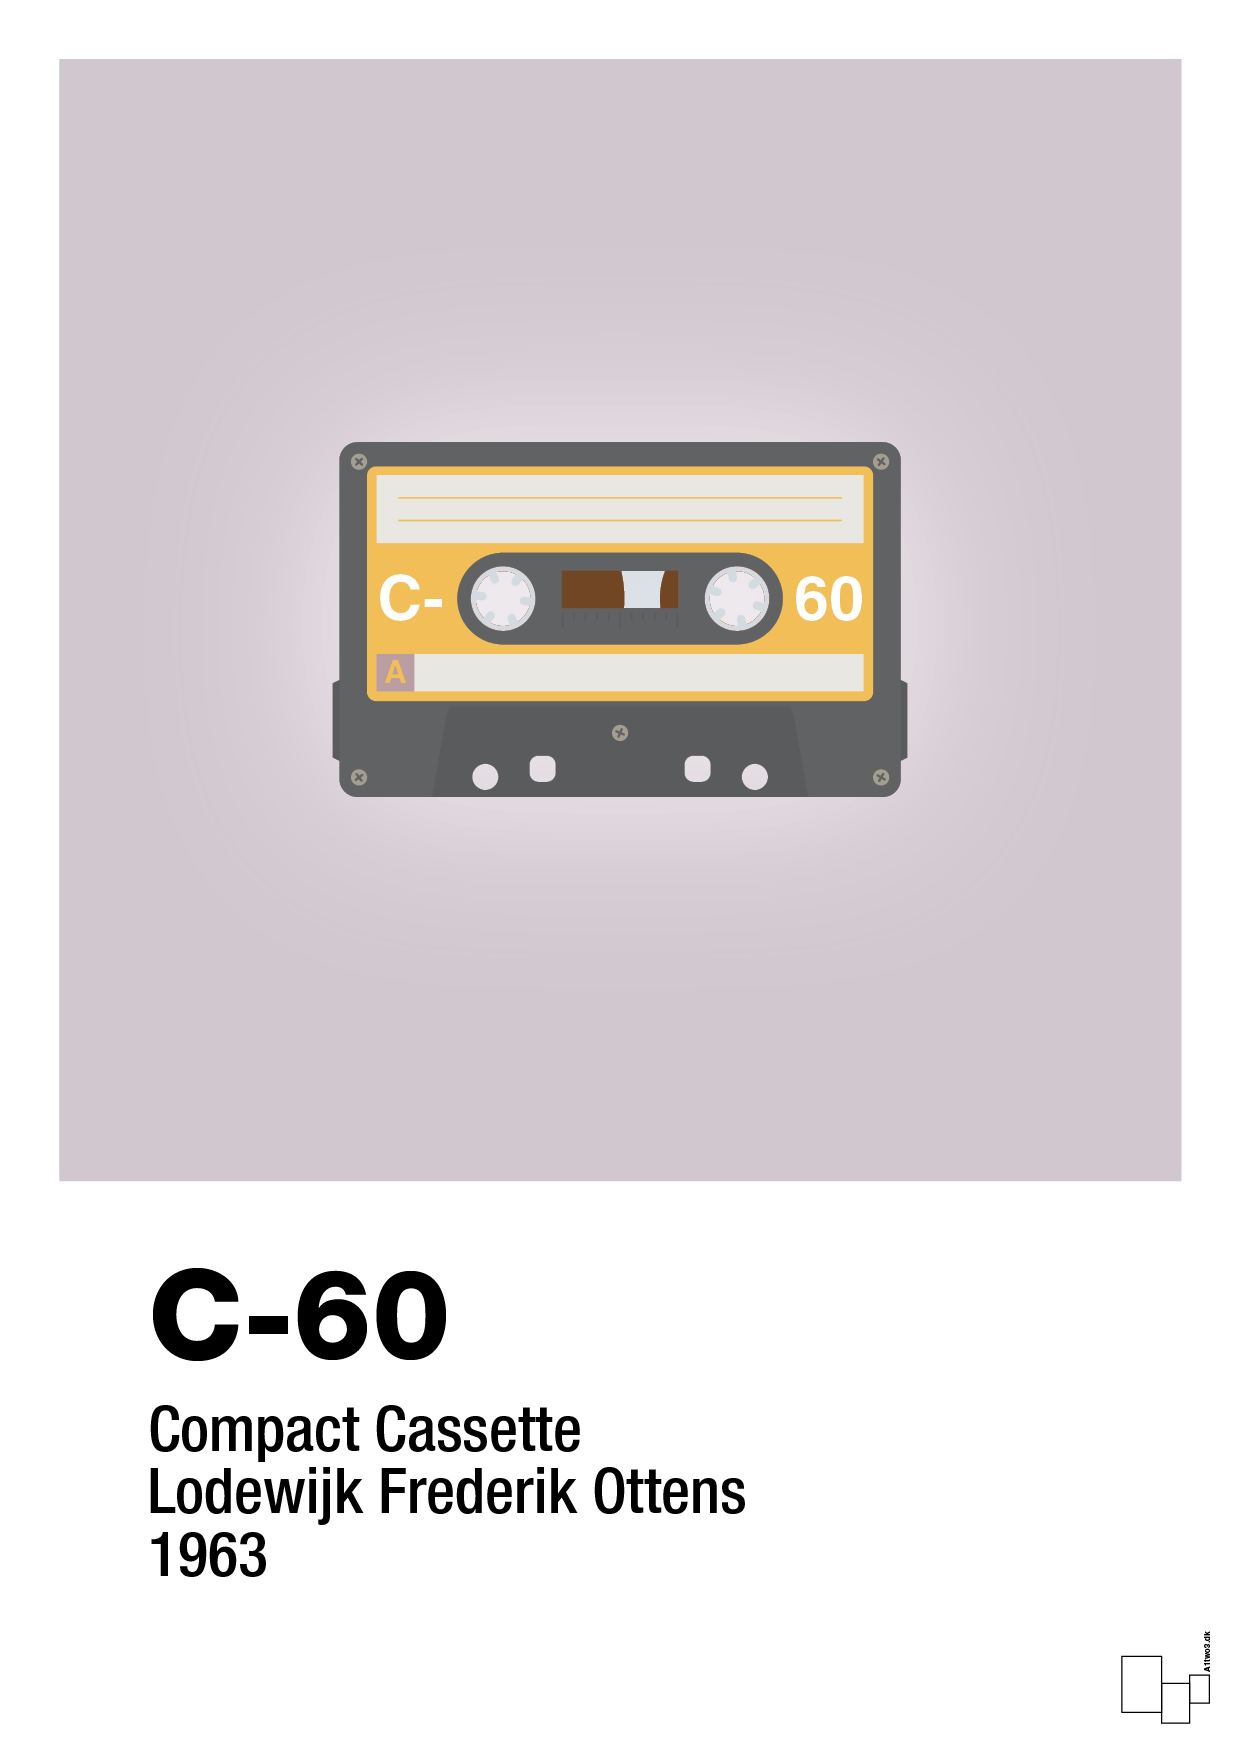 kassettebånd c-60 - Plakat med Grafik i Dusty Lilac